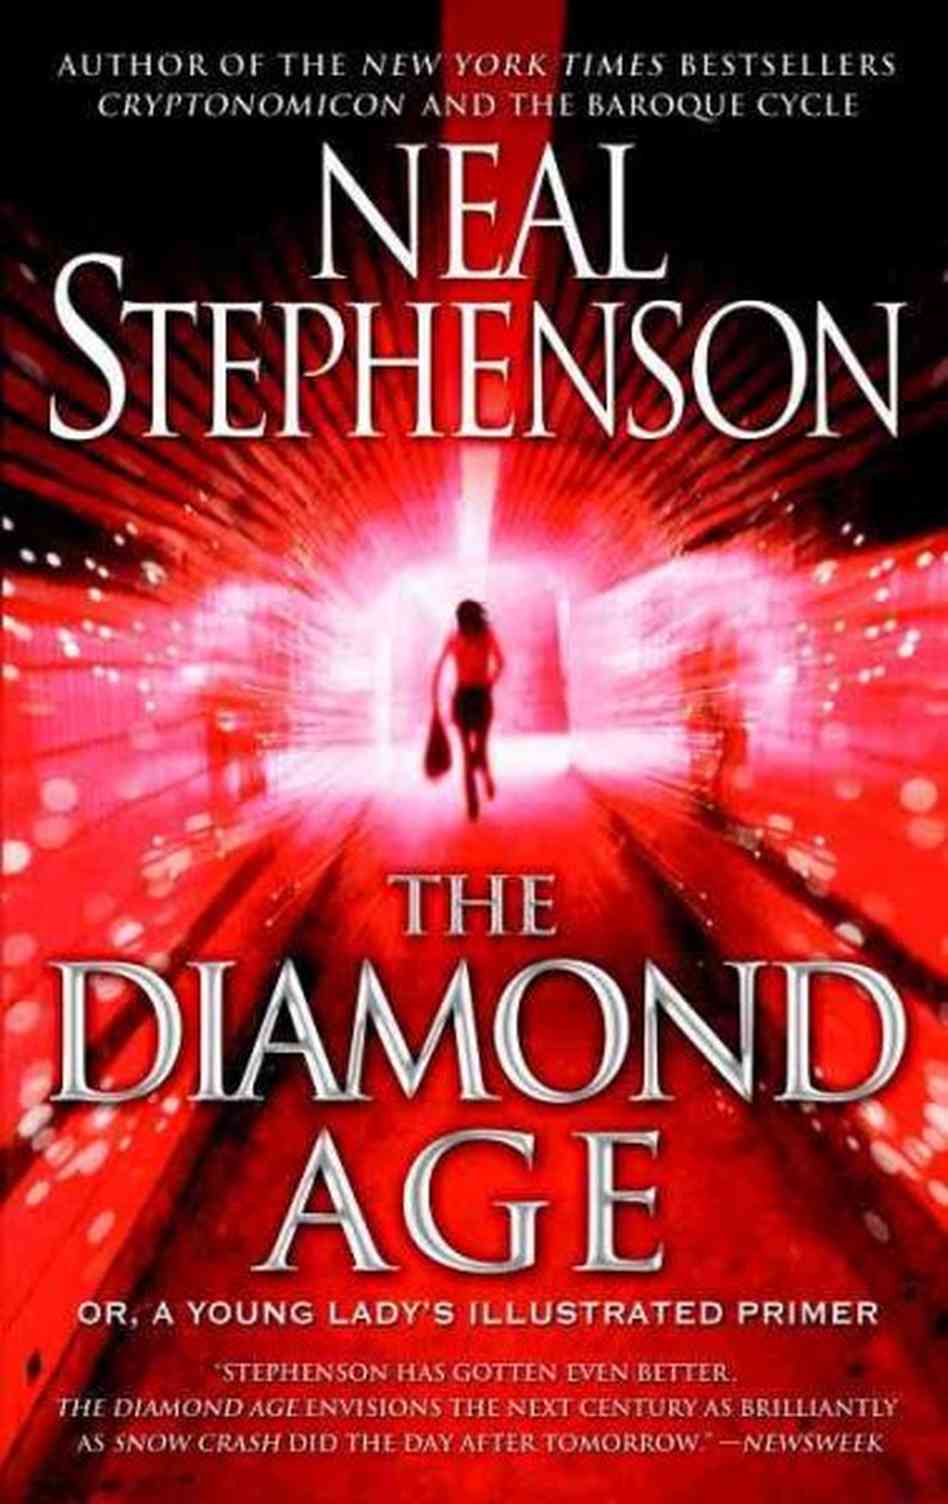 Neal Stephenson – The Diamond Age